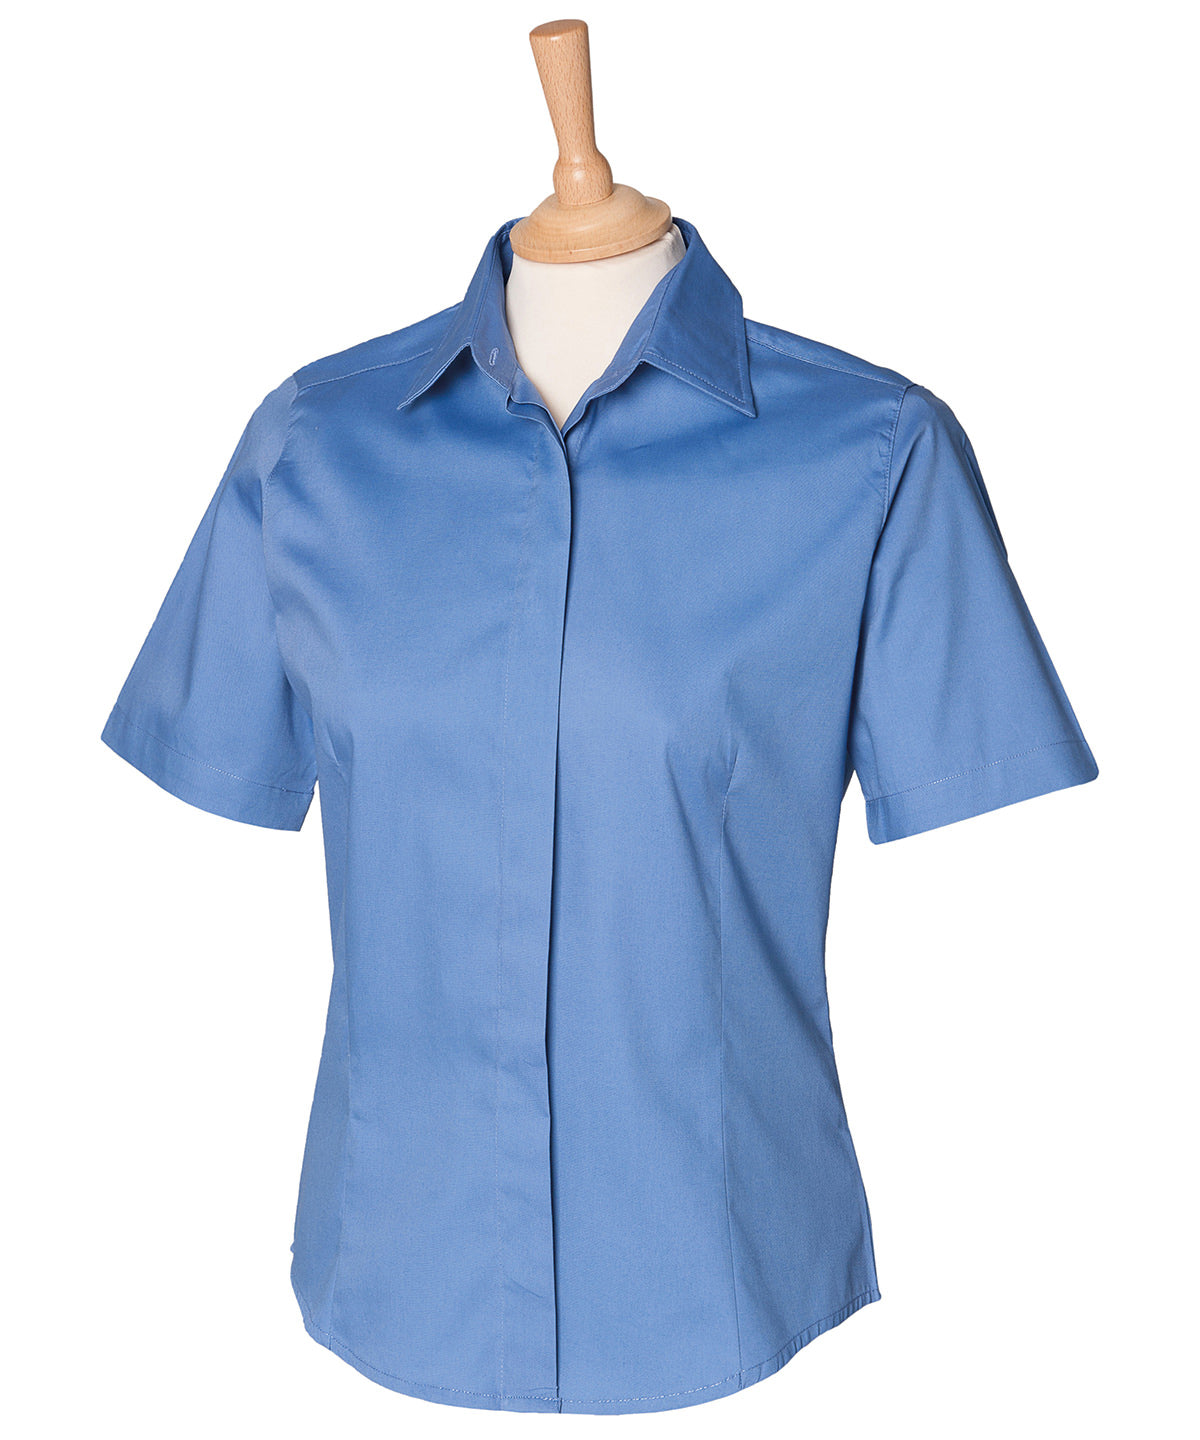 Bolir - Women's Short Sleeve Oxford Shirt